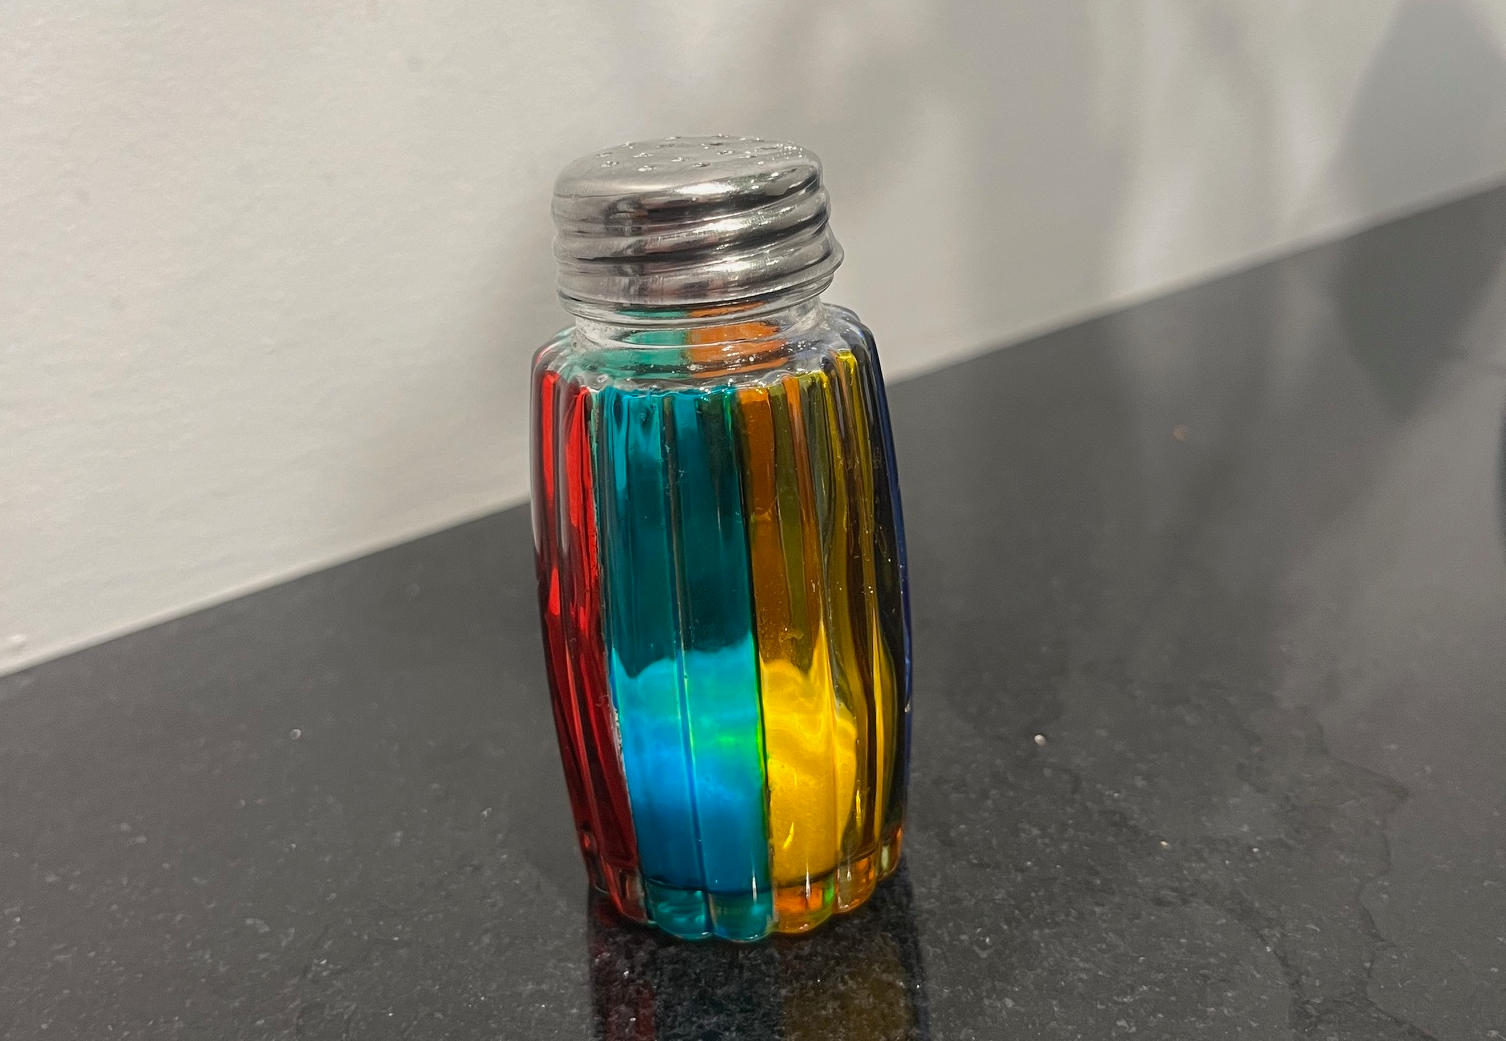 A beautiful, rainbow-hued stained-glass salt shaker